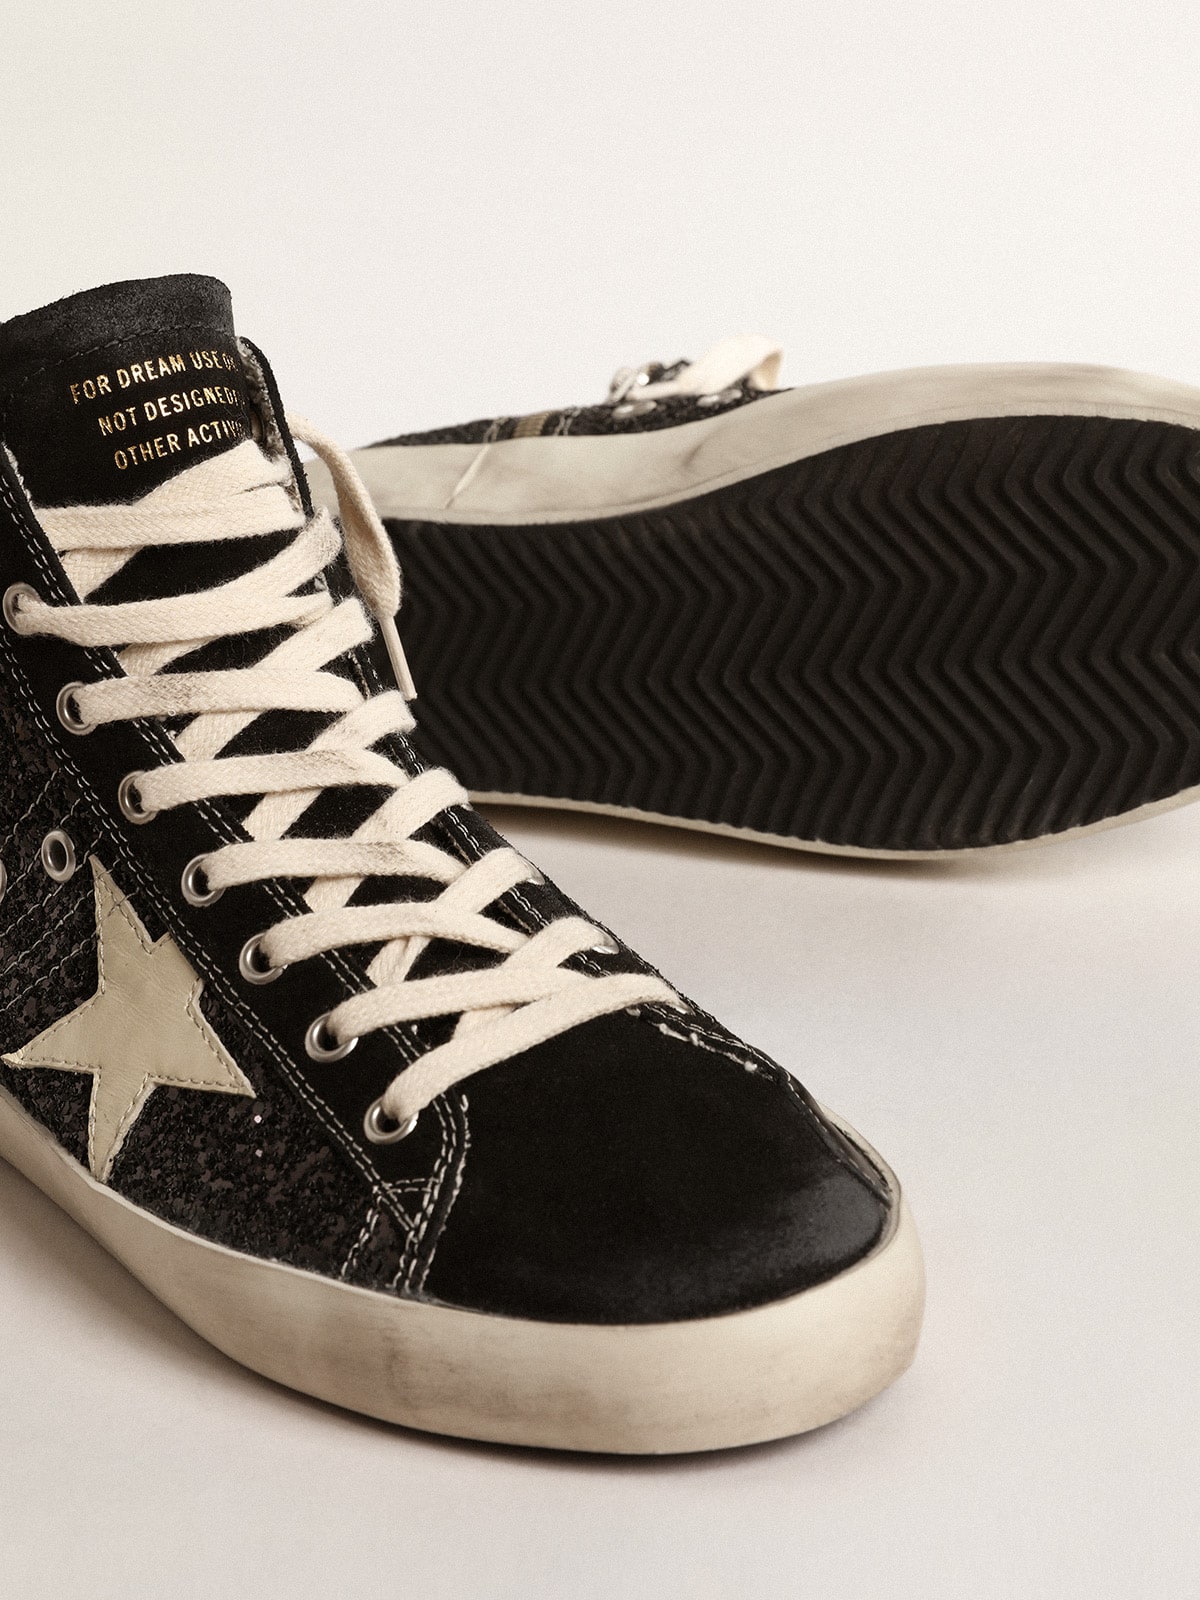 Francy Penstar LTD in glitter with ivory star and black heel tab